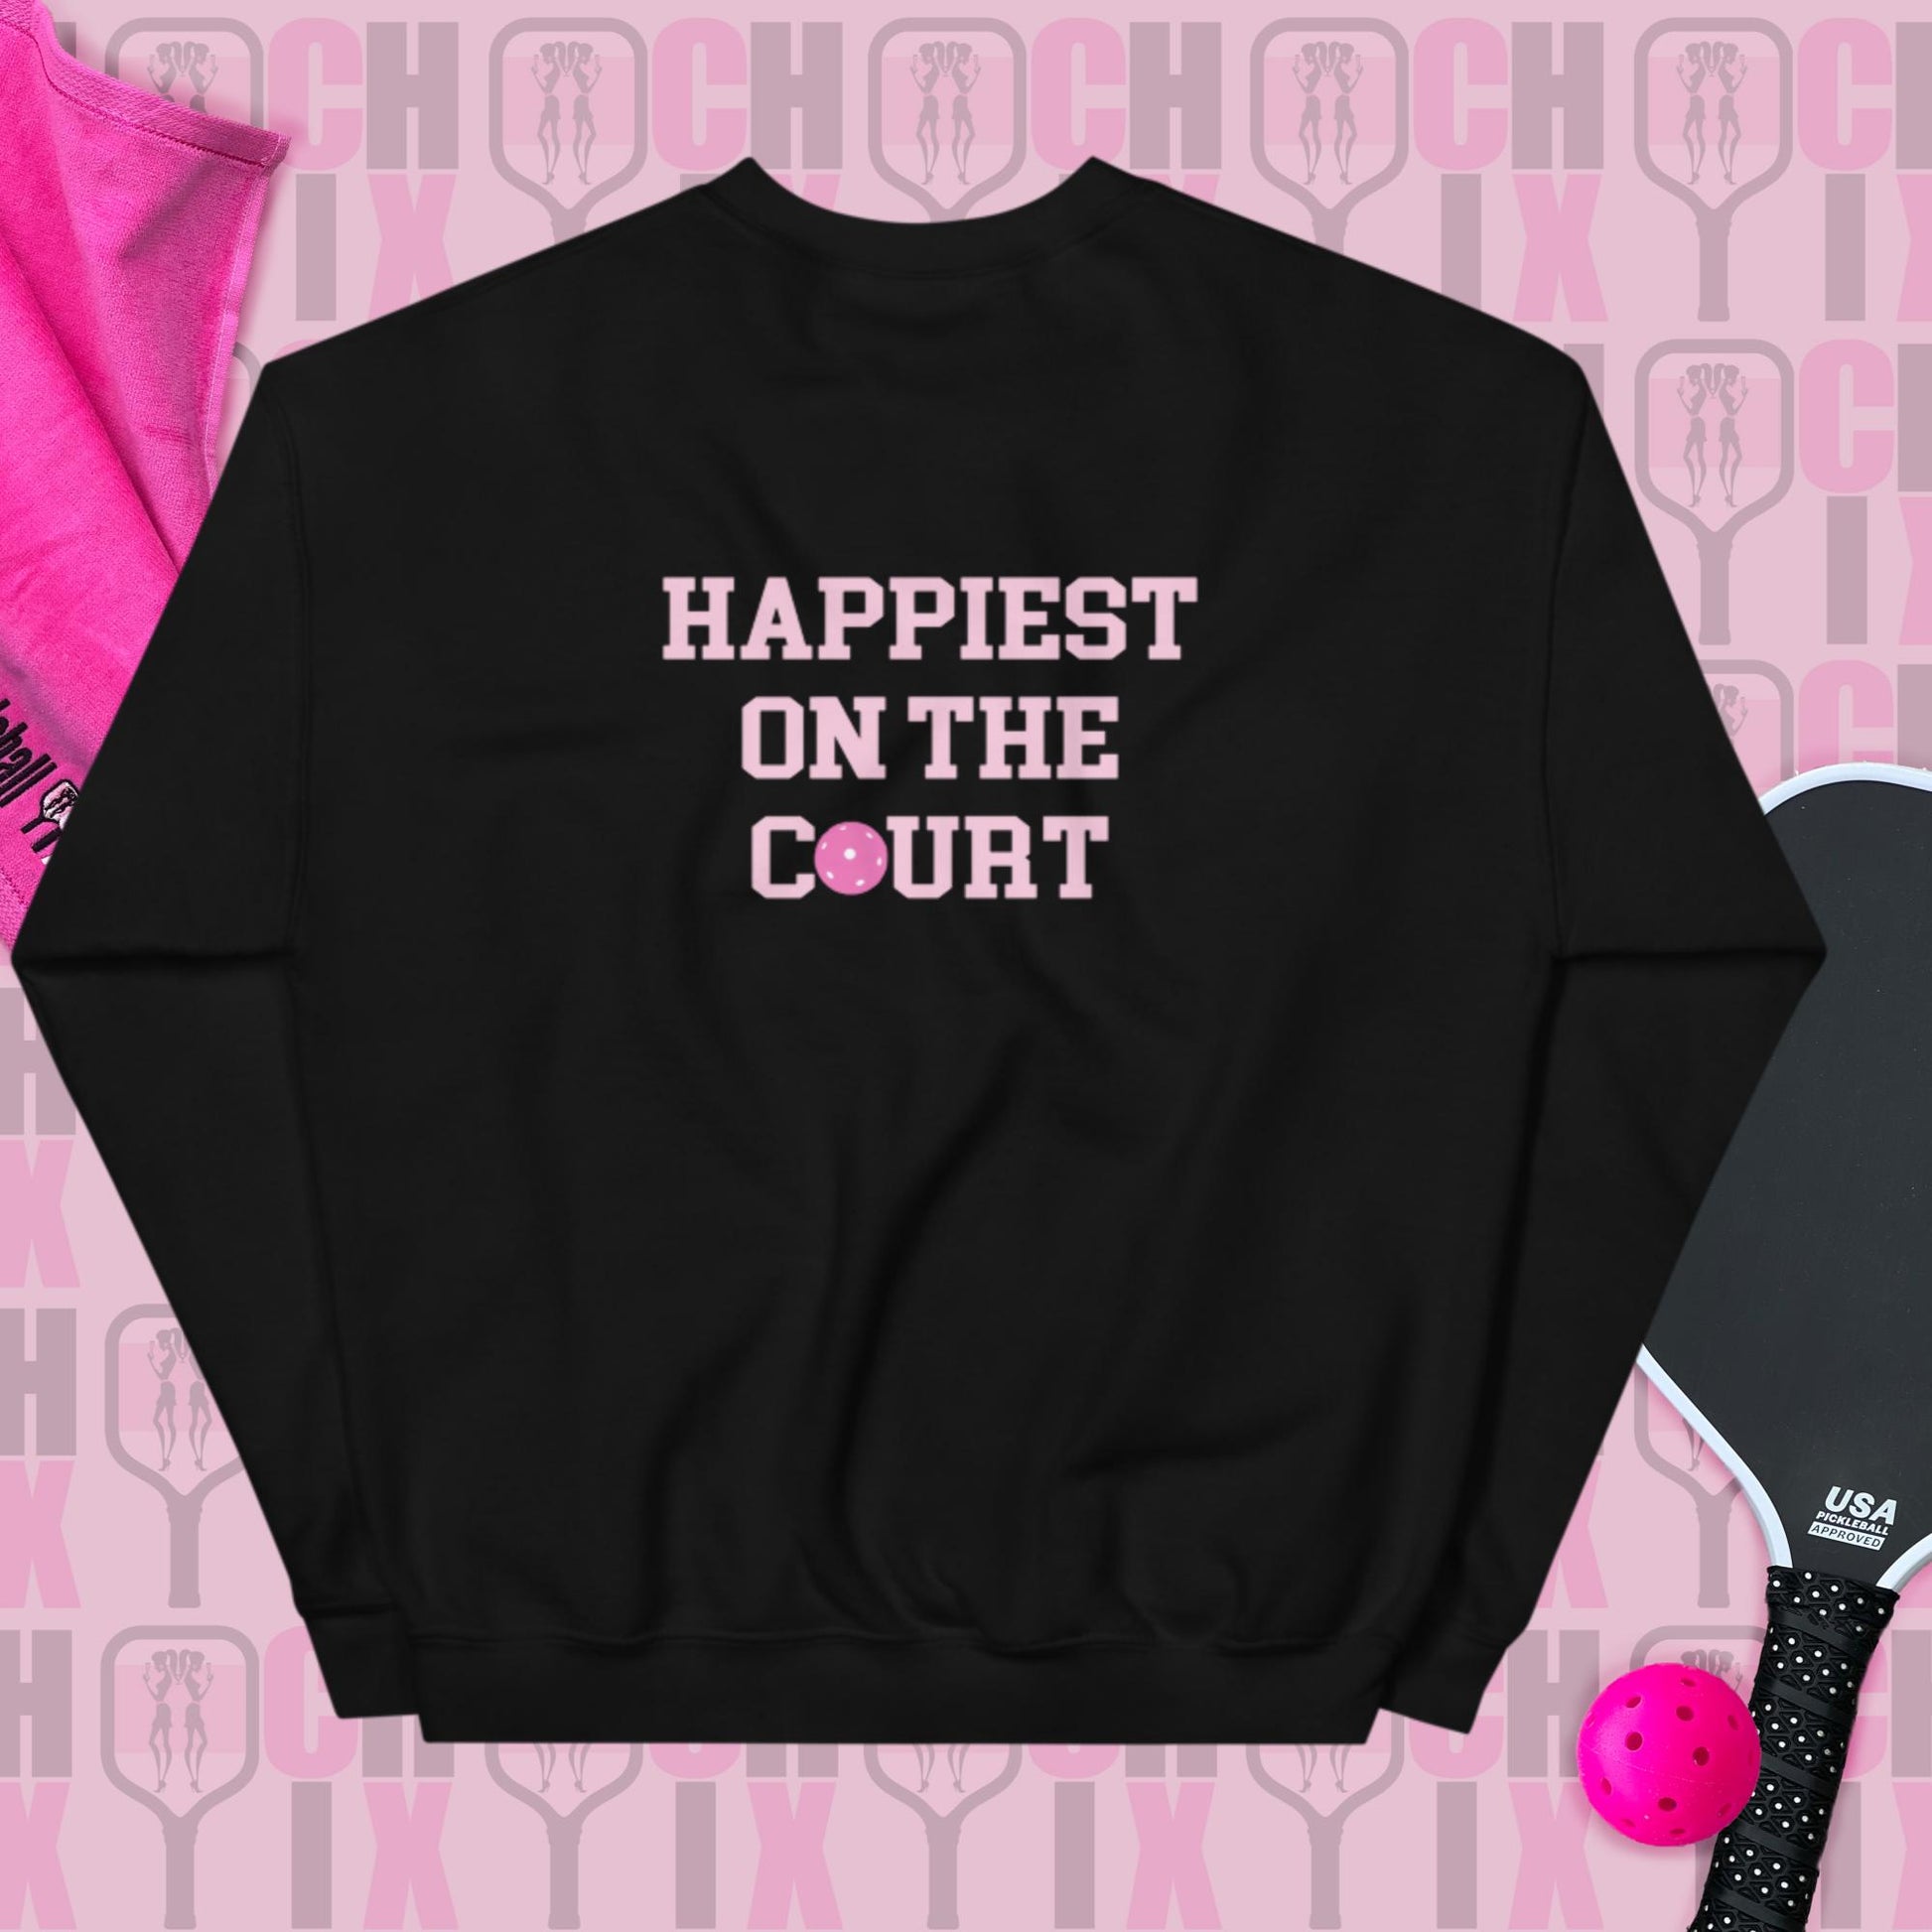 Comfy Pickleball Lifestyle Crew Neck Sweatshirt - Shop The Courts